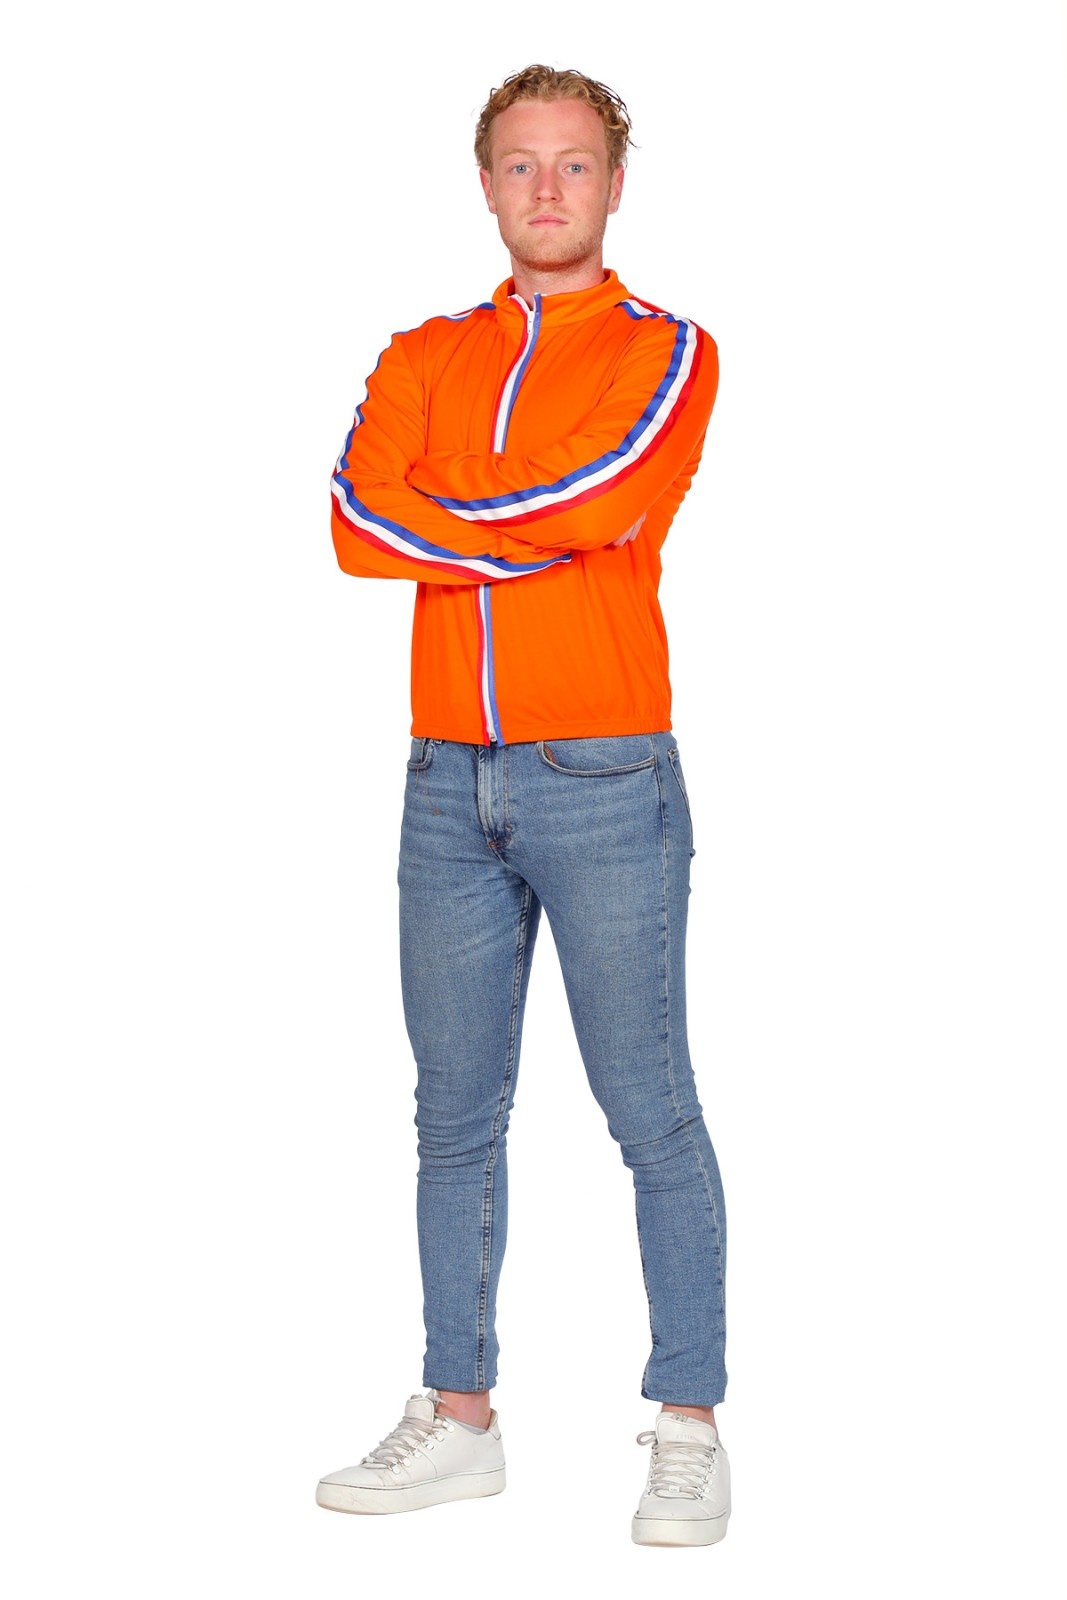 Wilbers - 100% NL & Oranje Kostuum - Sportief Oranje Trainingsjack Holland Man - oranje - XL - Carnavalskleding - Verkleedkleding